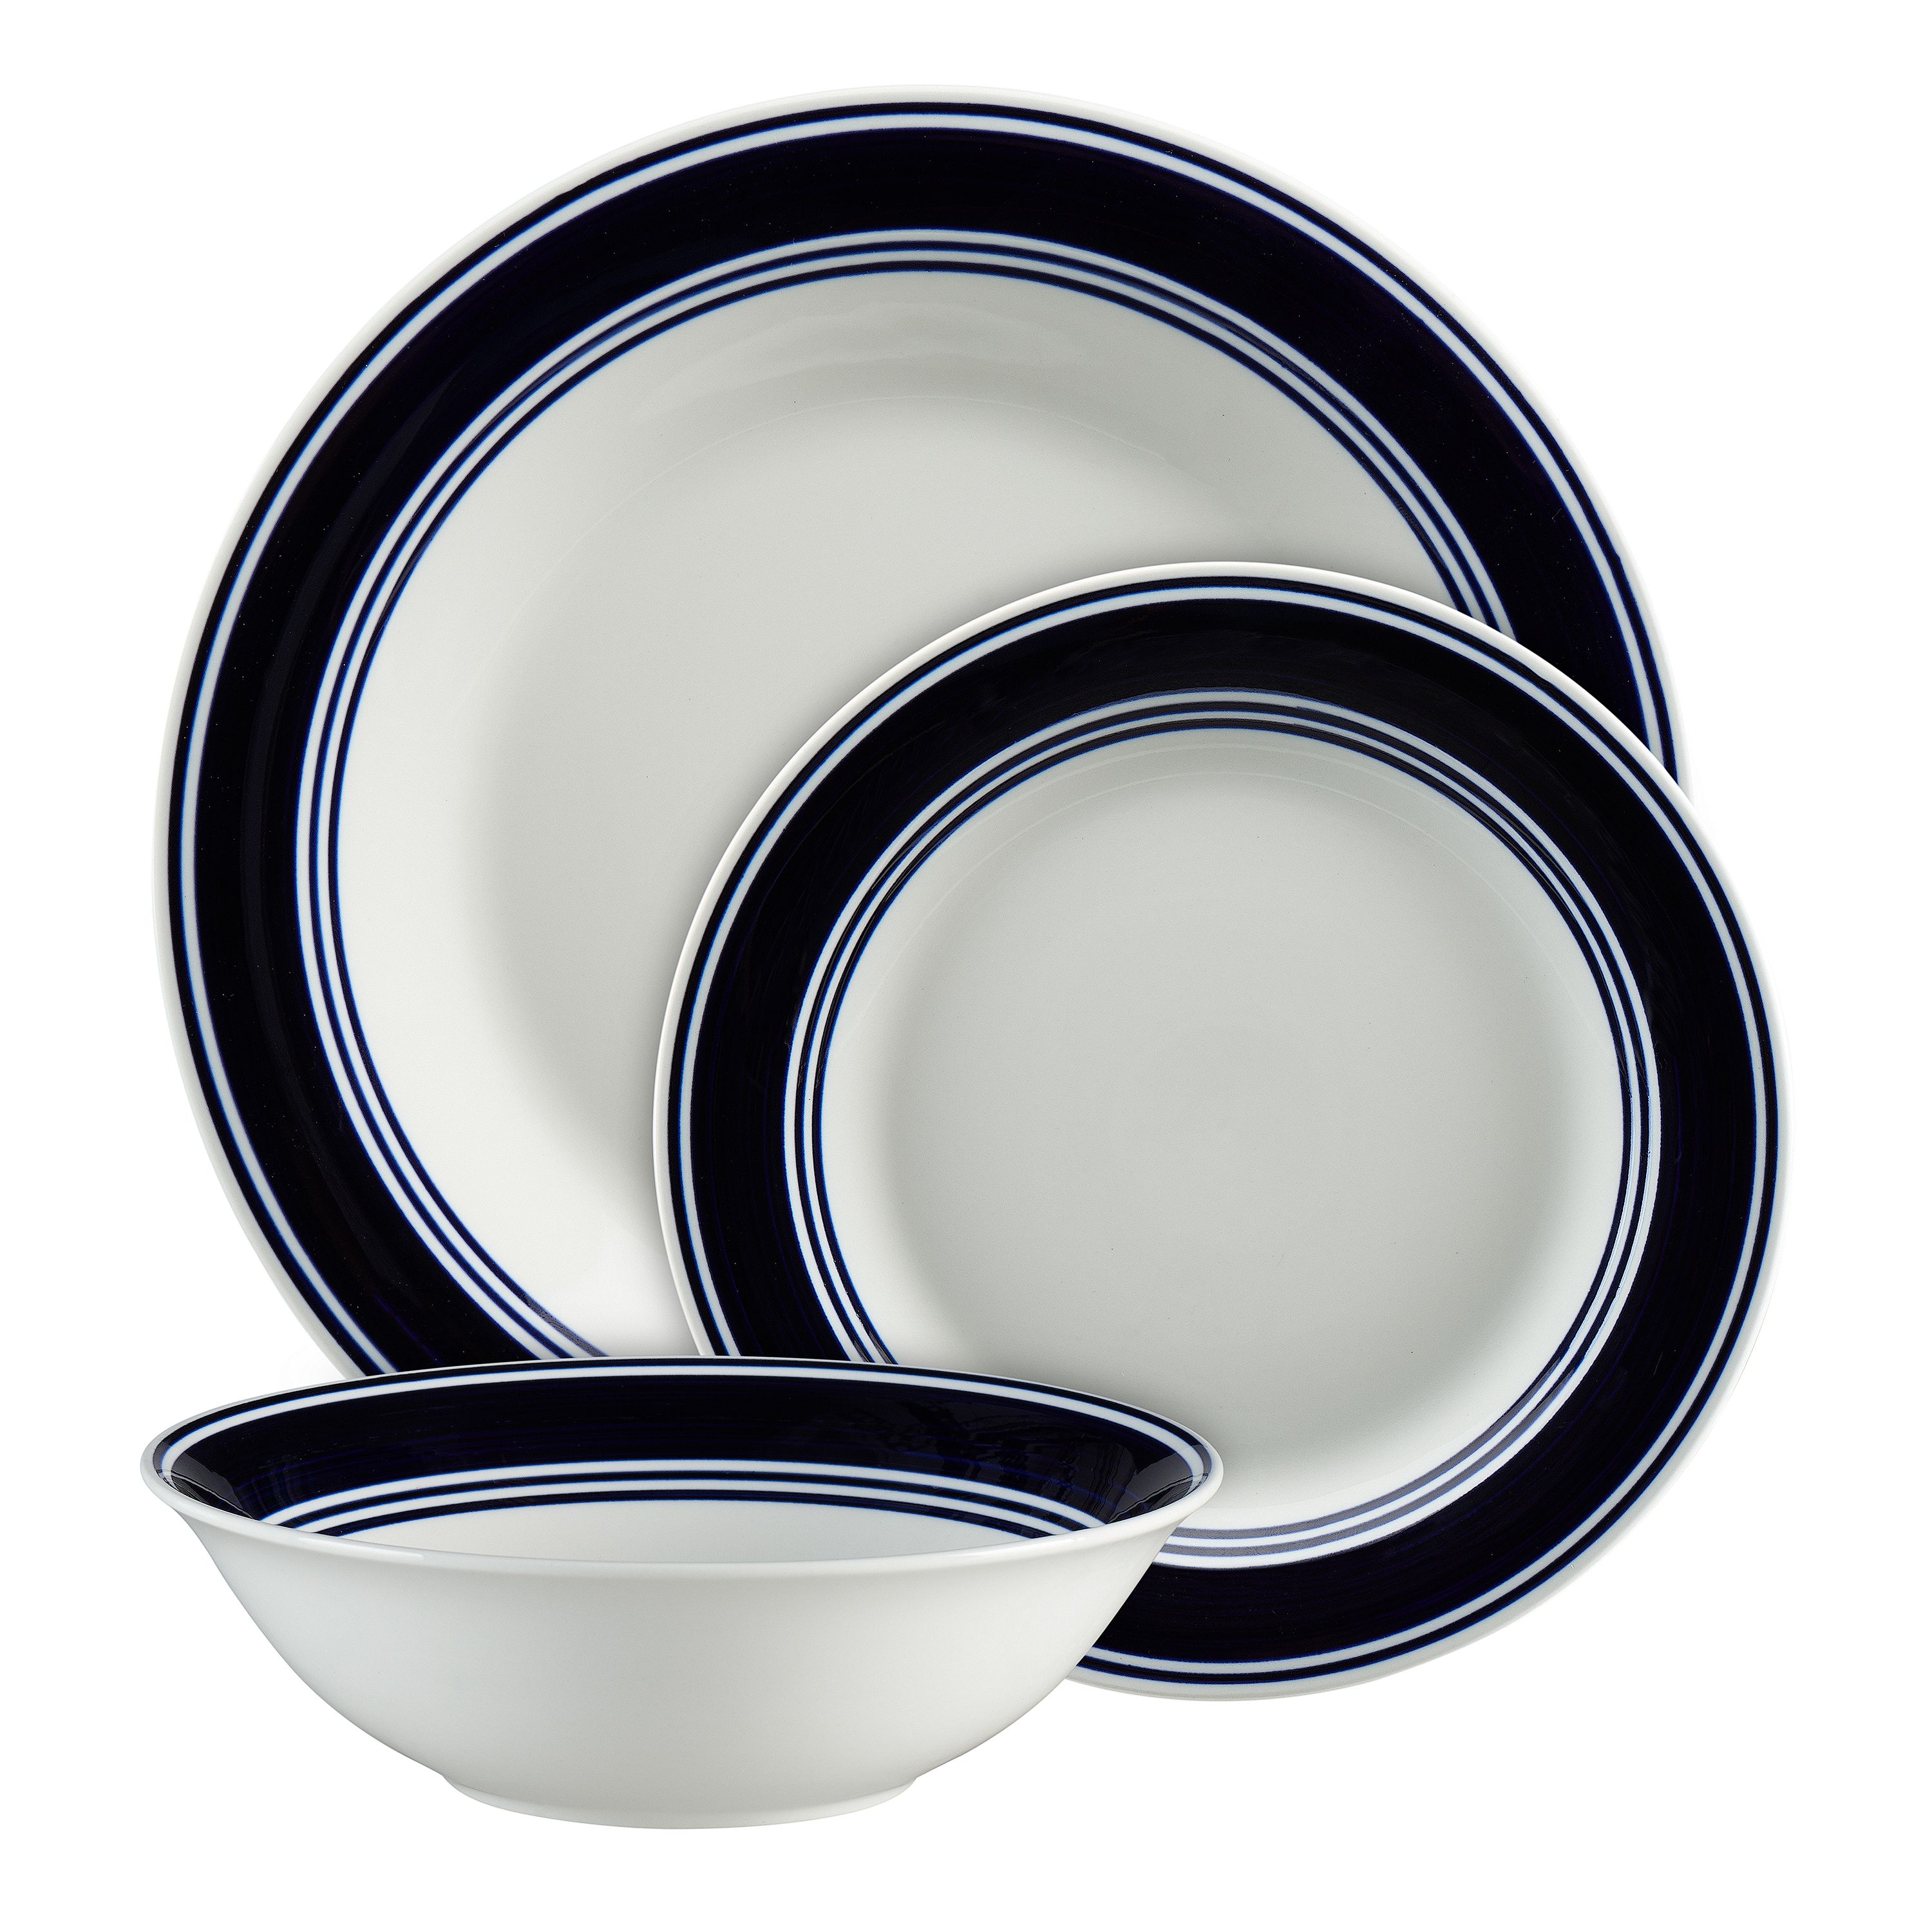 Mainstays Blue Banded 12-Piece Stoneware Dinnerware Set - image 1 of 6